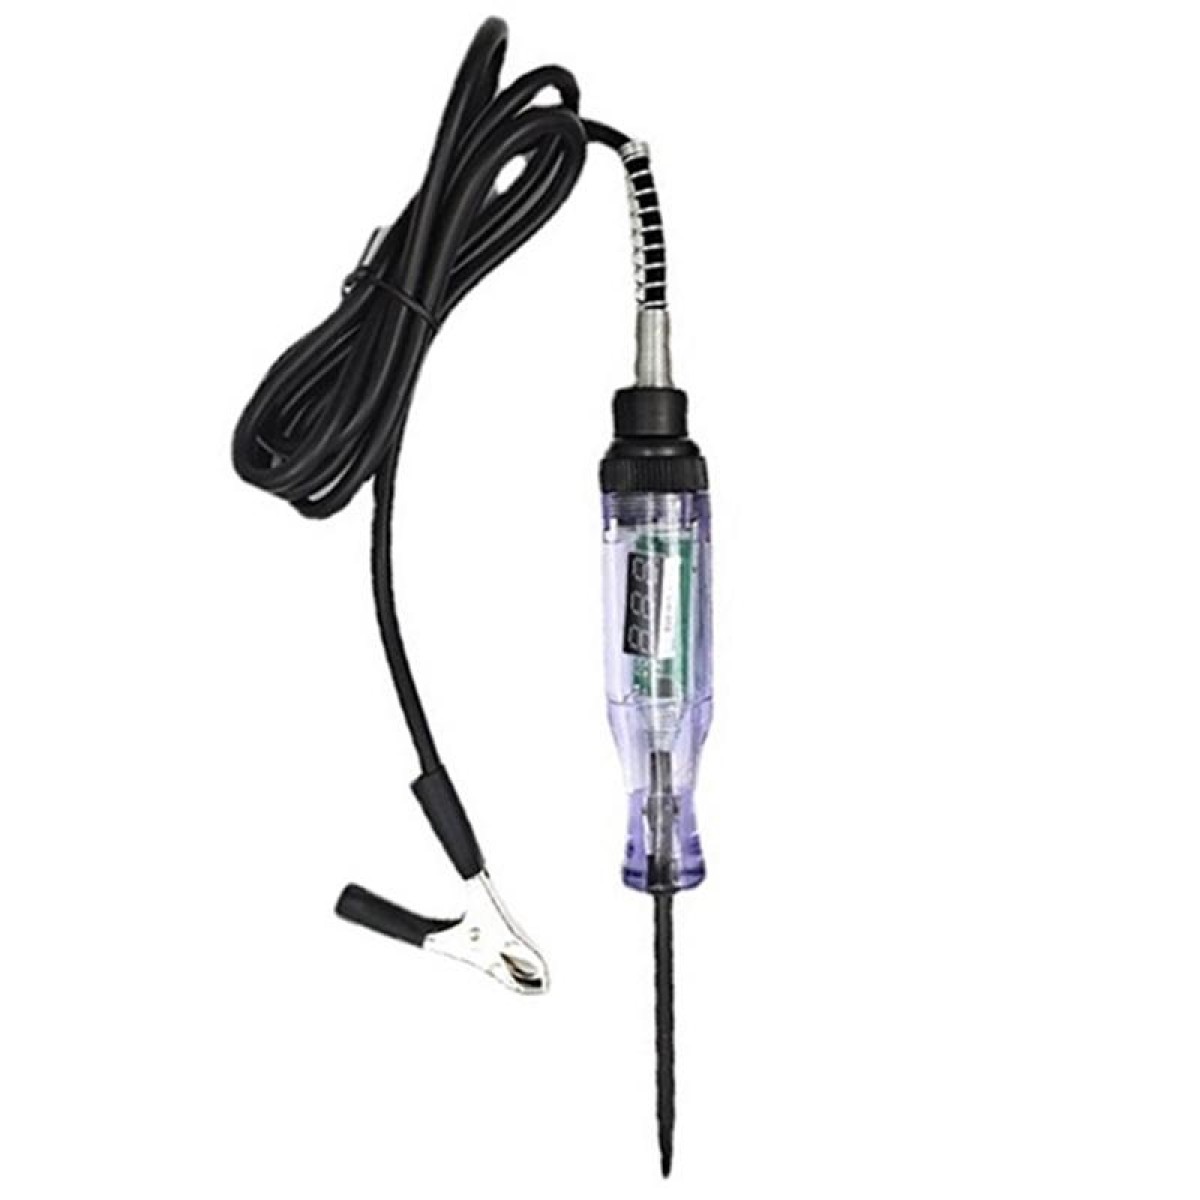 3-70V Automotive Circuit Testing Electric Pen Repair Tool, Model: D Black Cable